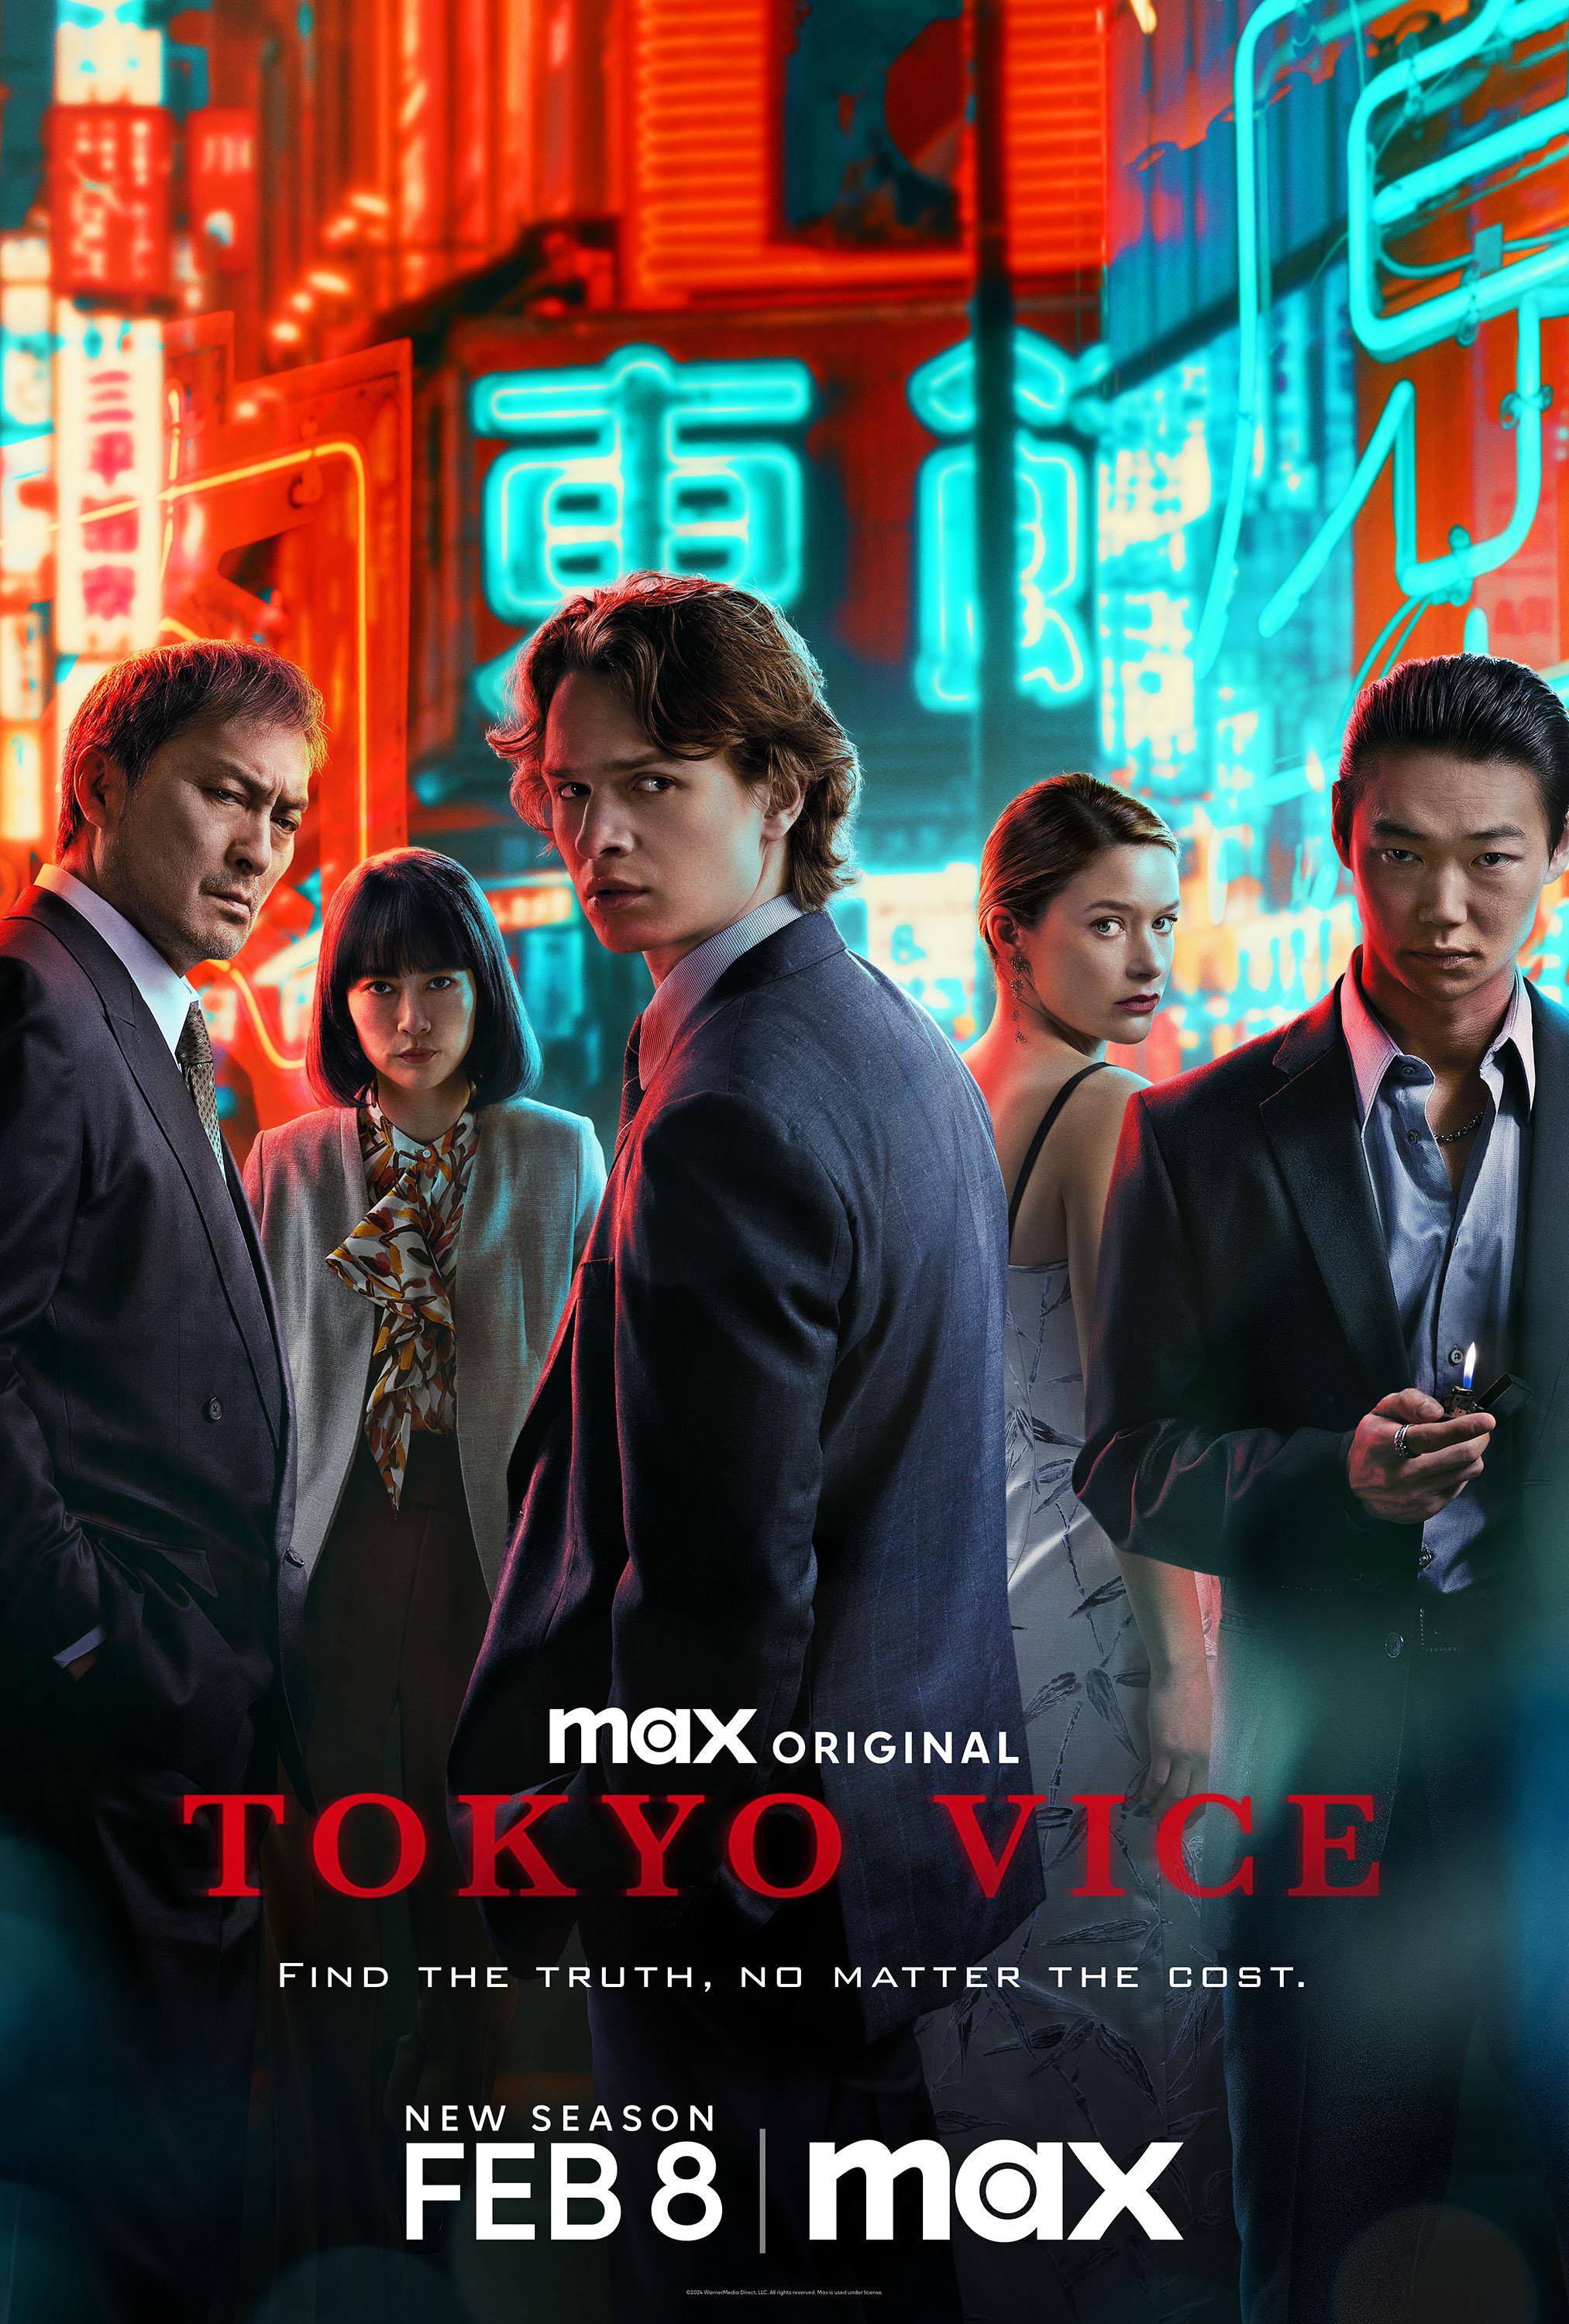 TOKYO VICE s2 (max/HBO)